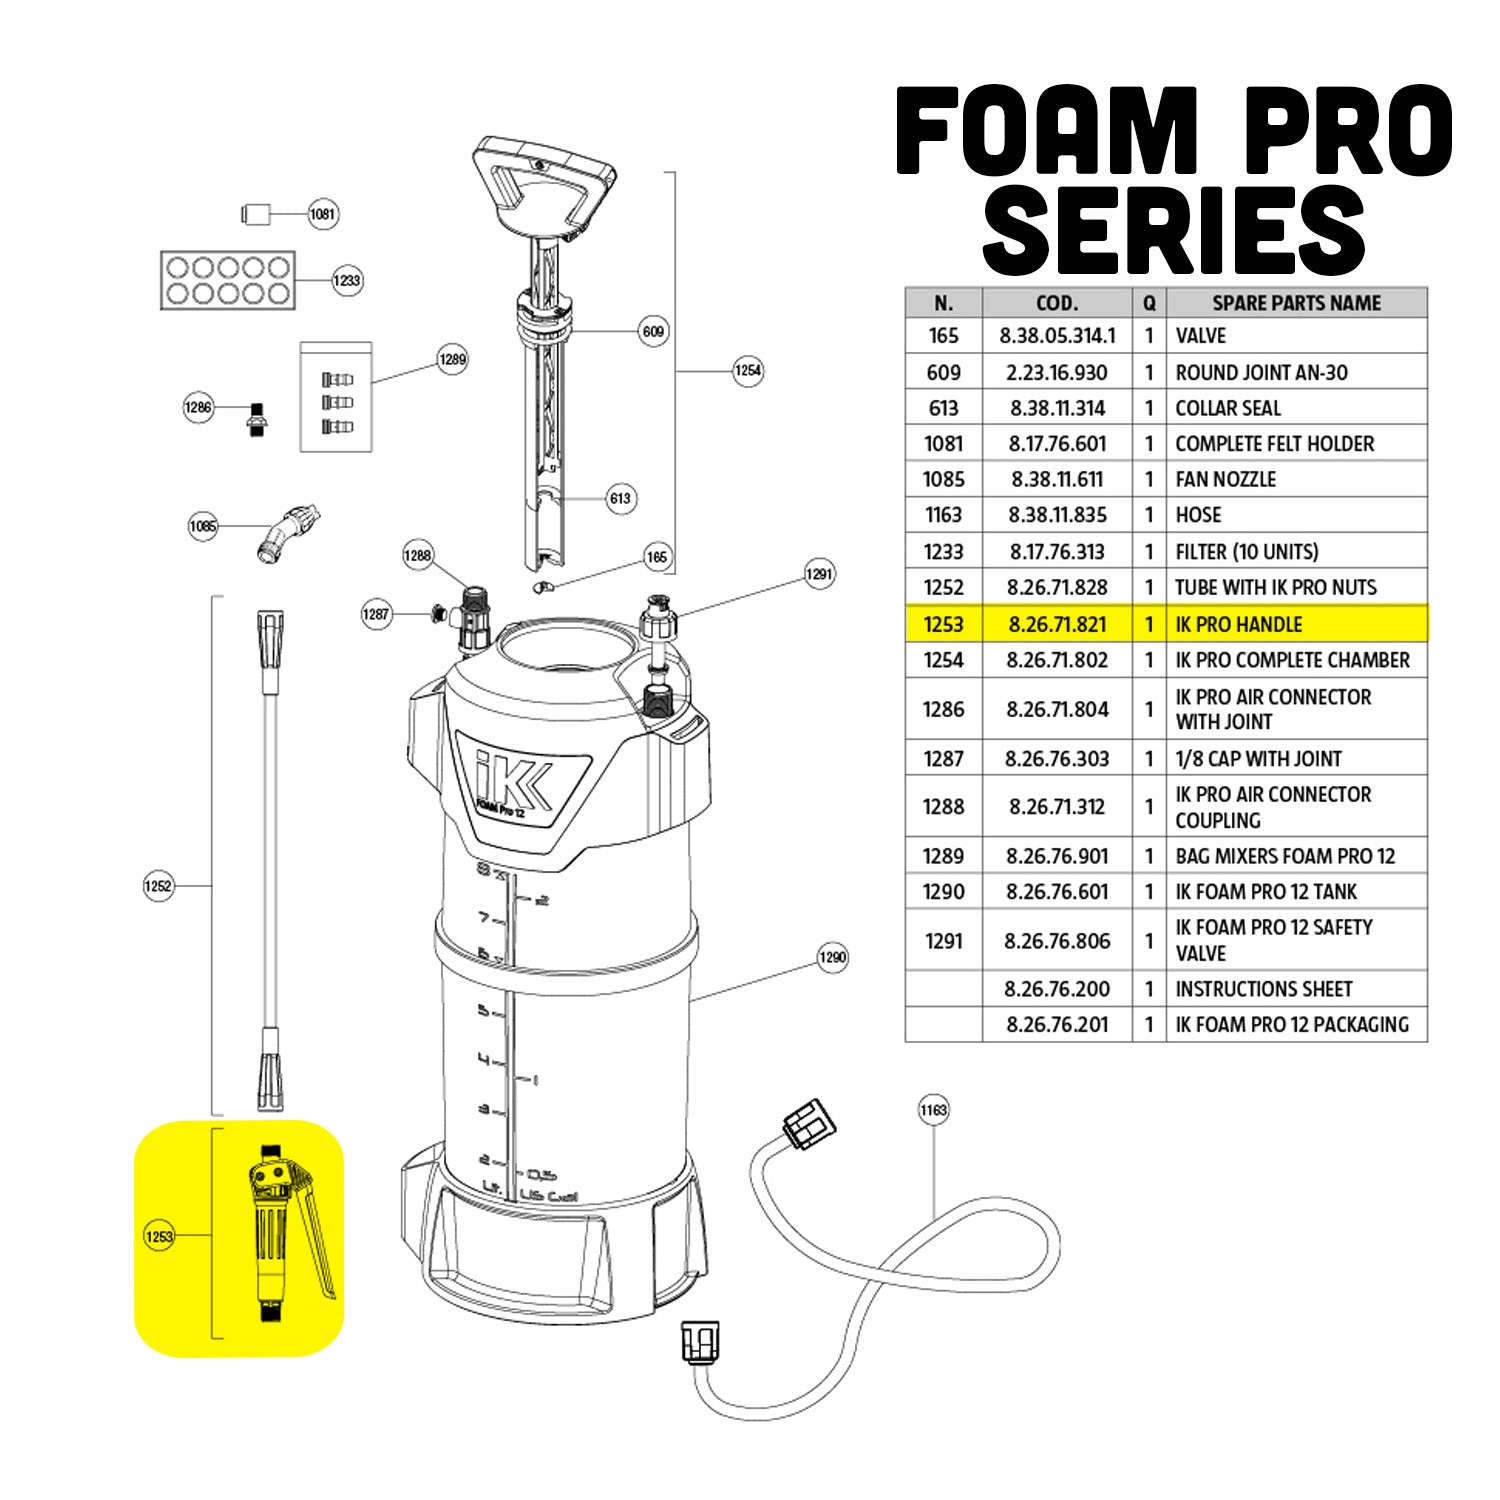 1253-ik-foam-pro-handle-parts-guide